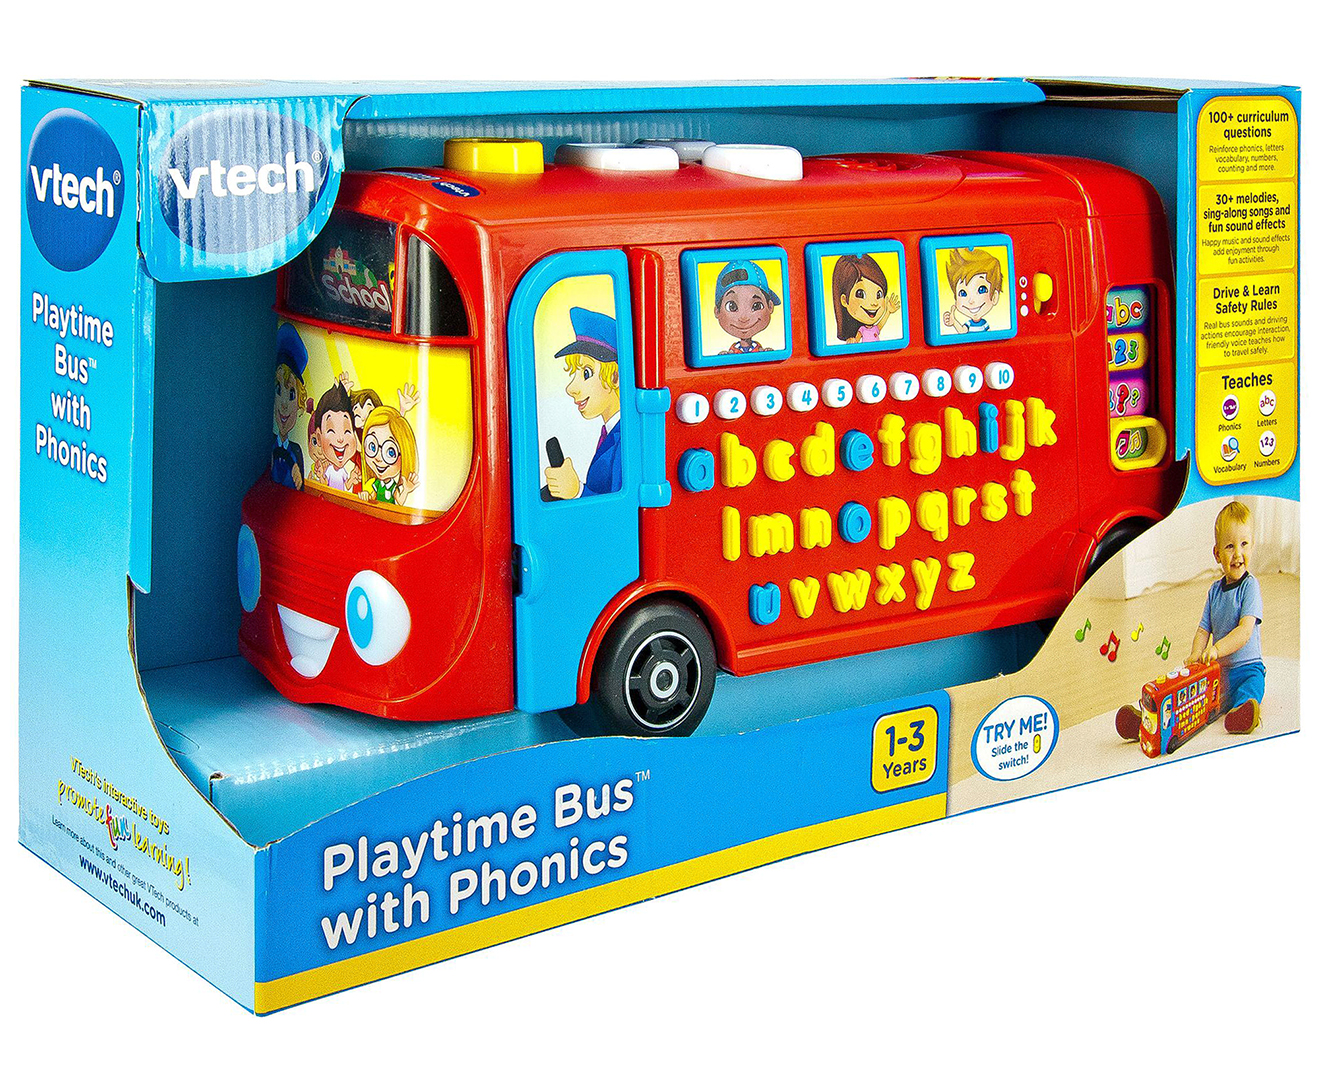 vtech playtime bus